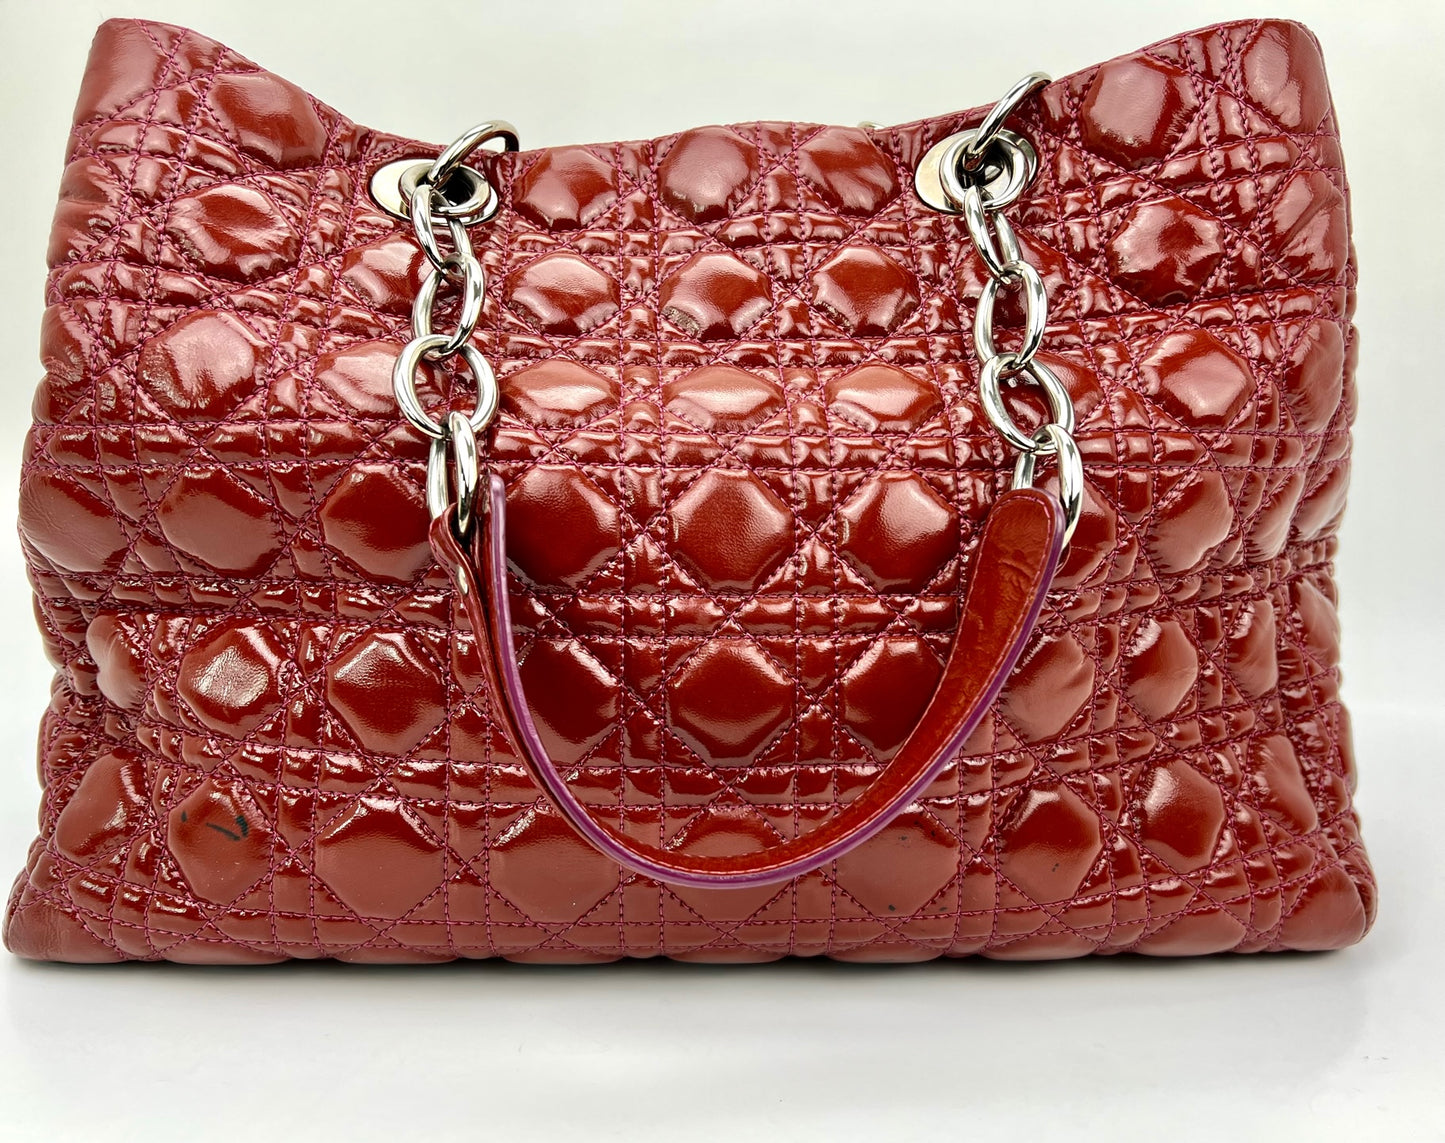 Christian Dior Pre-owned Cannage Lady Dior Handbag